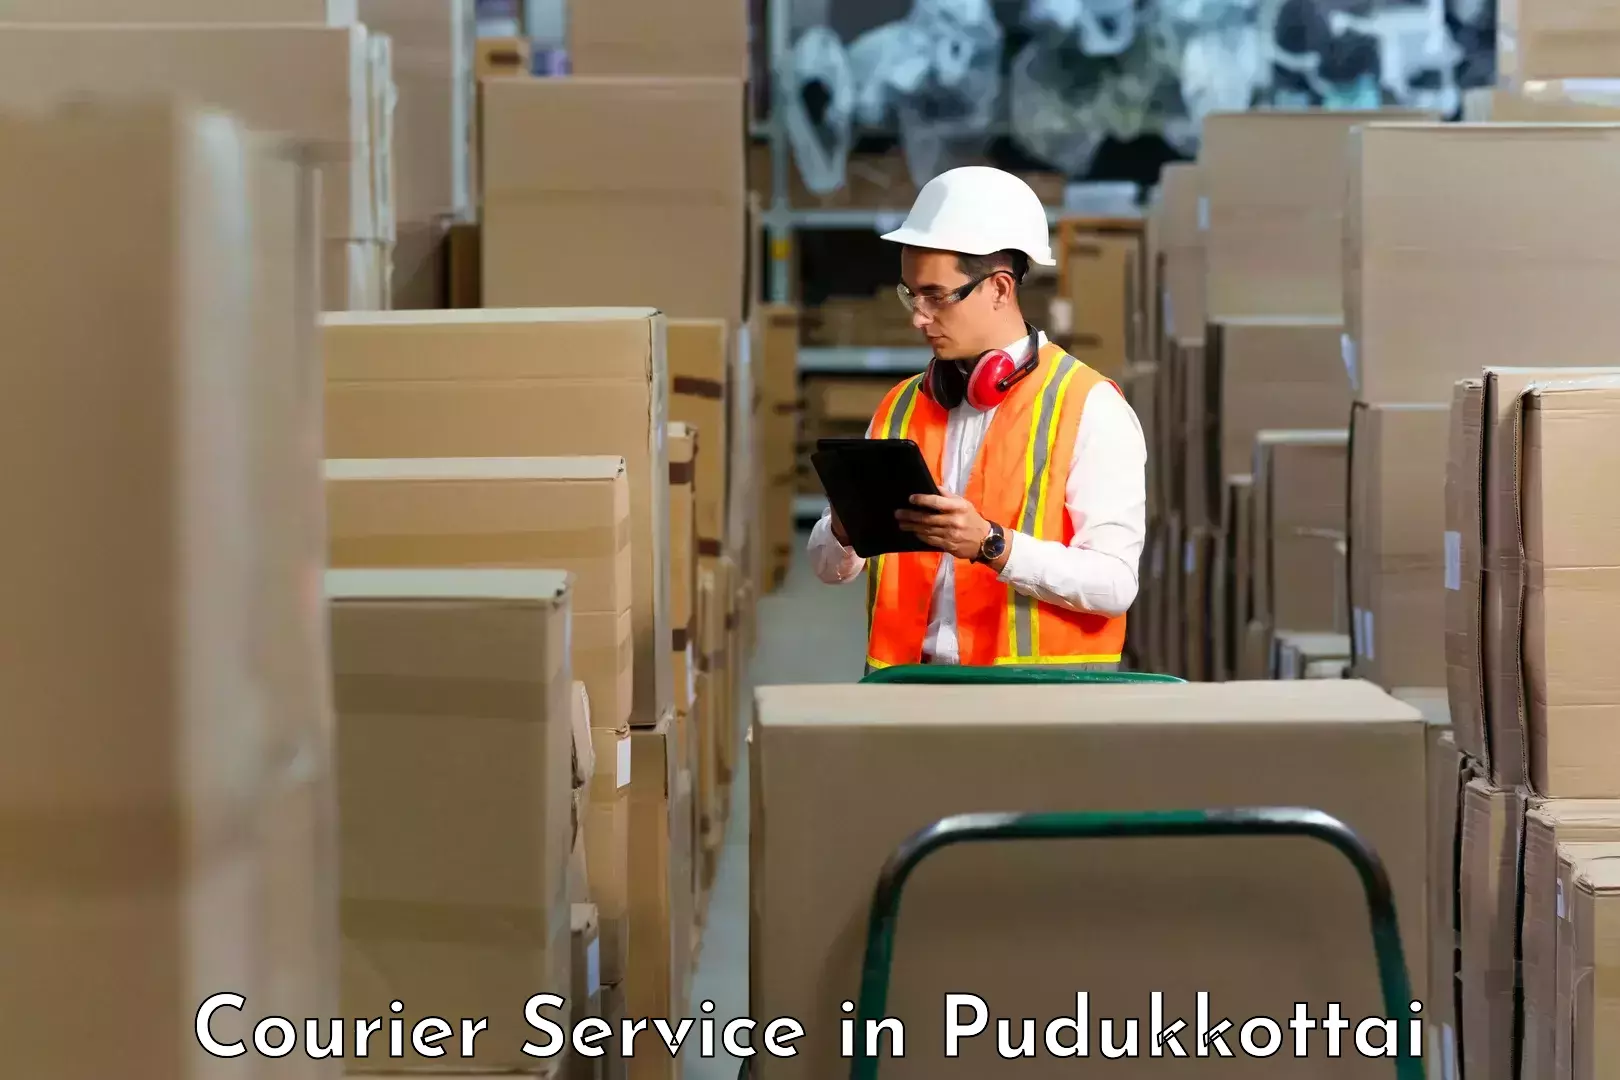 Urban courier service in Pudukkottai